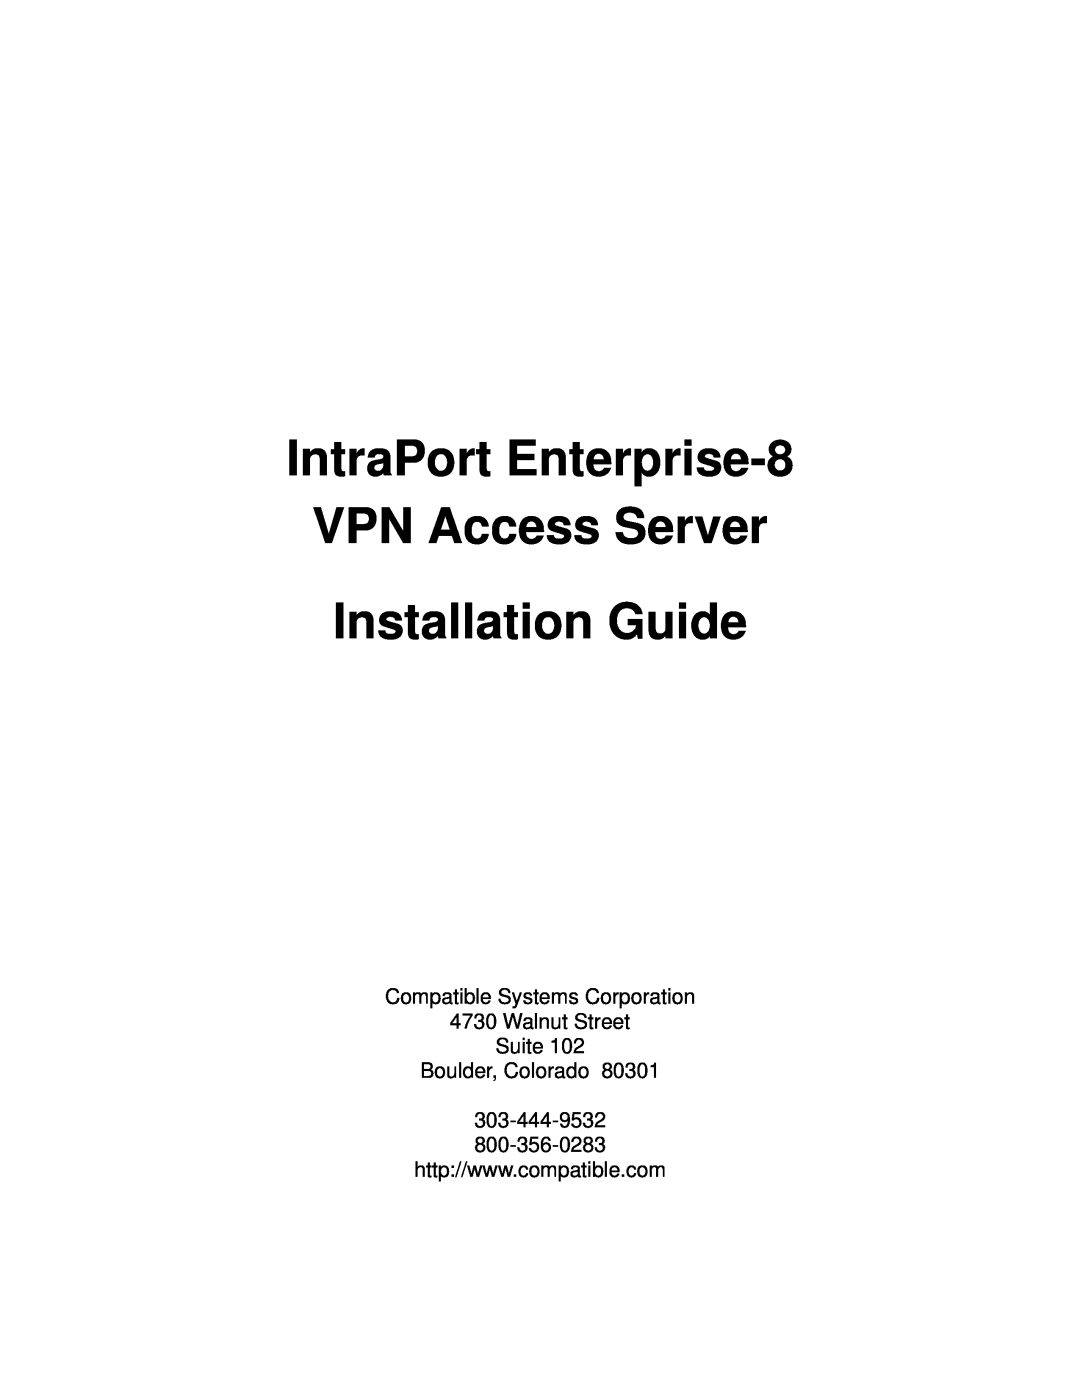 Compatible Systems A00-1869 manual IntraPort Enterprise-8 VPN Access Server Installation Guide, Boulder, Colorado 